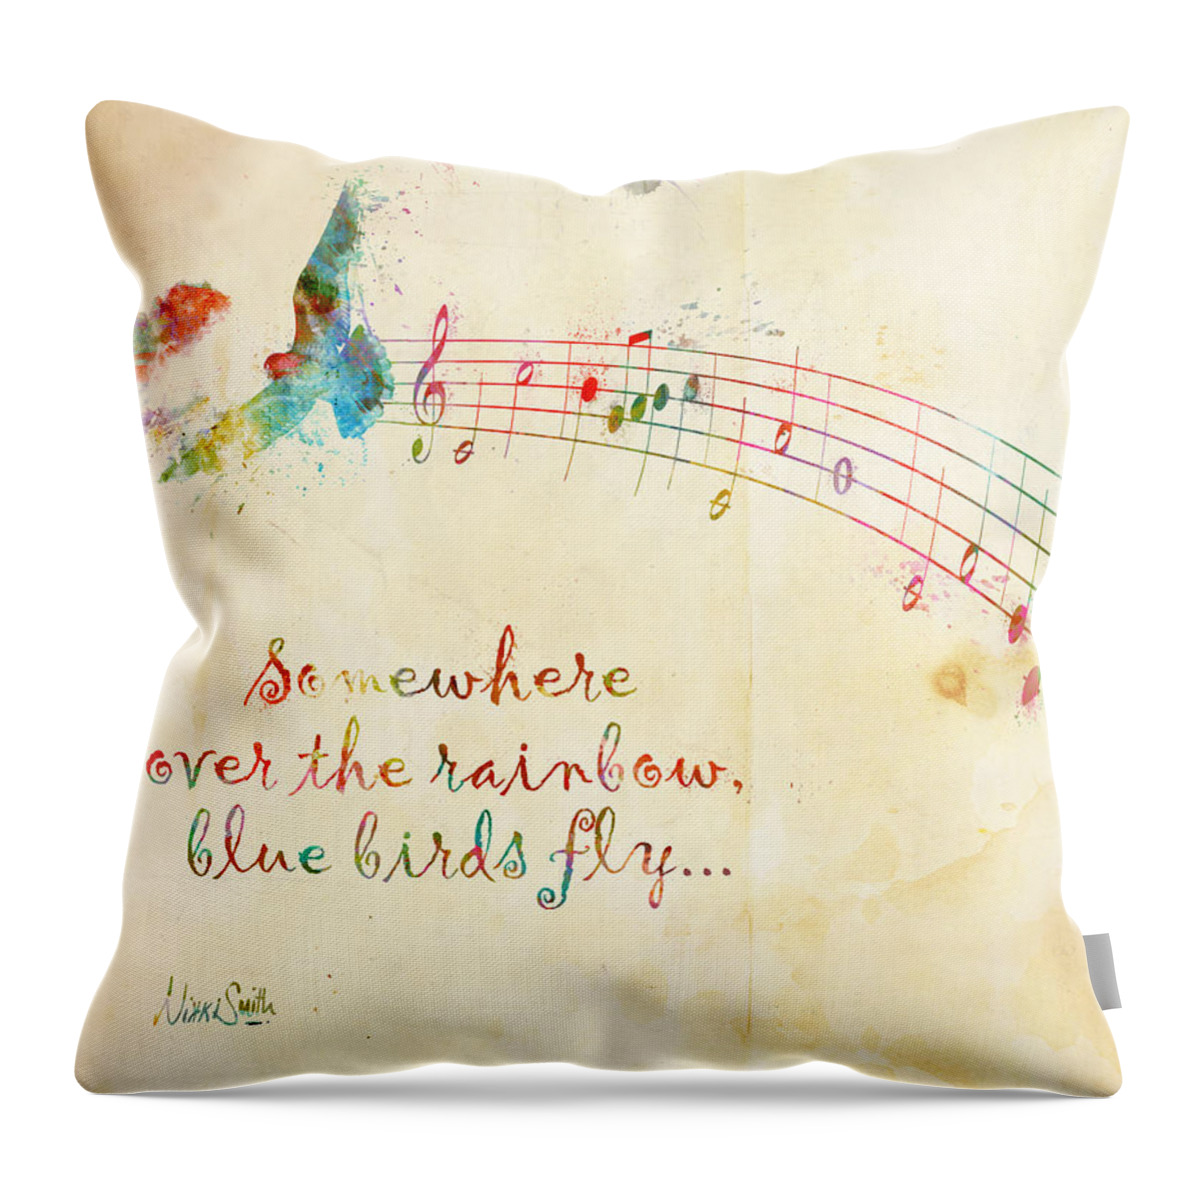 Rainbow Throw Pillow featuring the digital art Somewhere Over the Rainbow by Nikki Smith